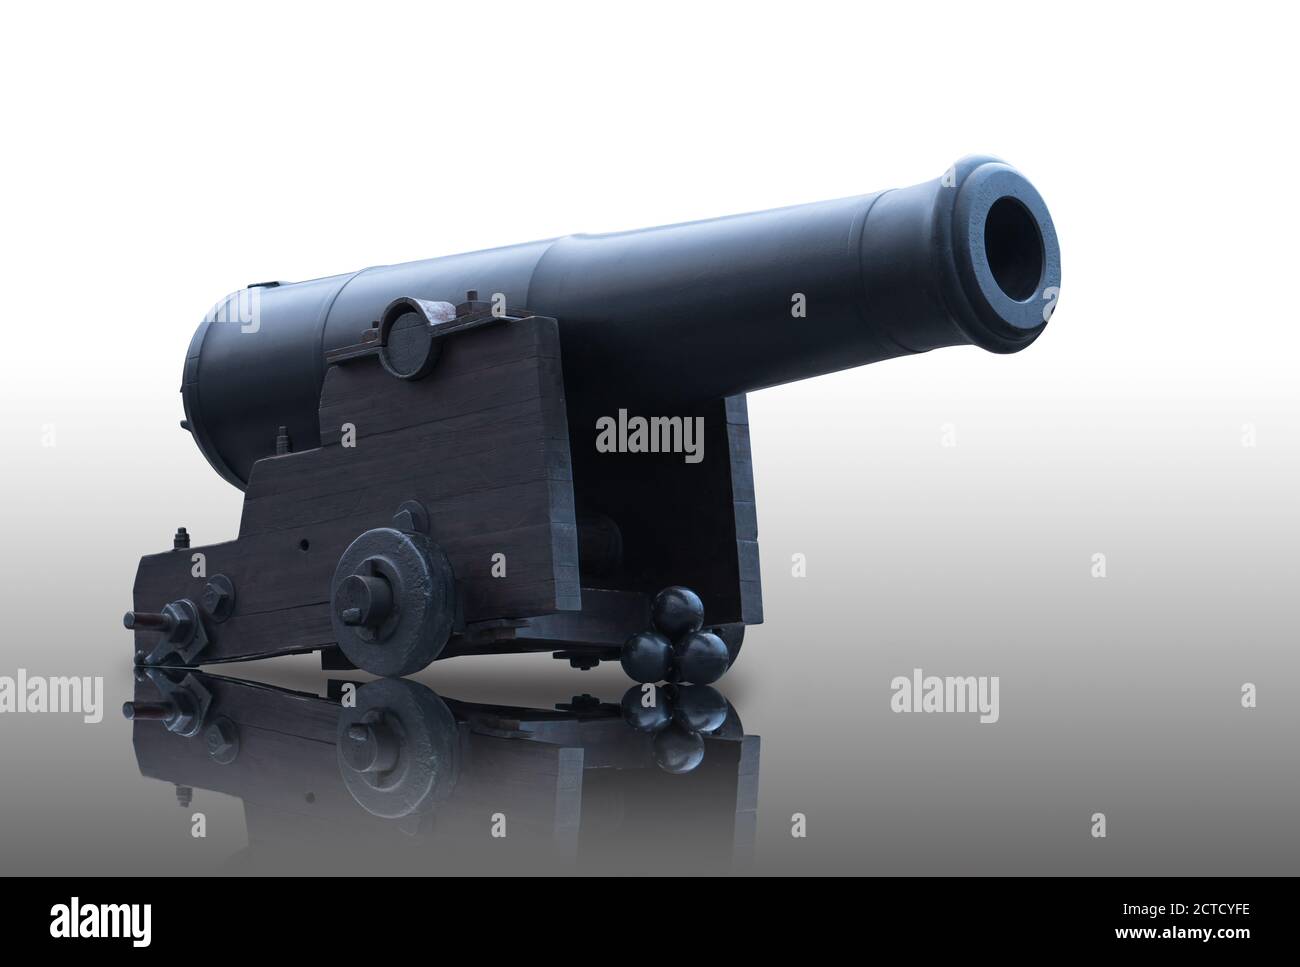 Antique artillery gun on a white background Stock Photo